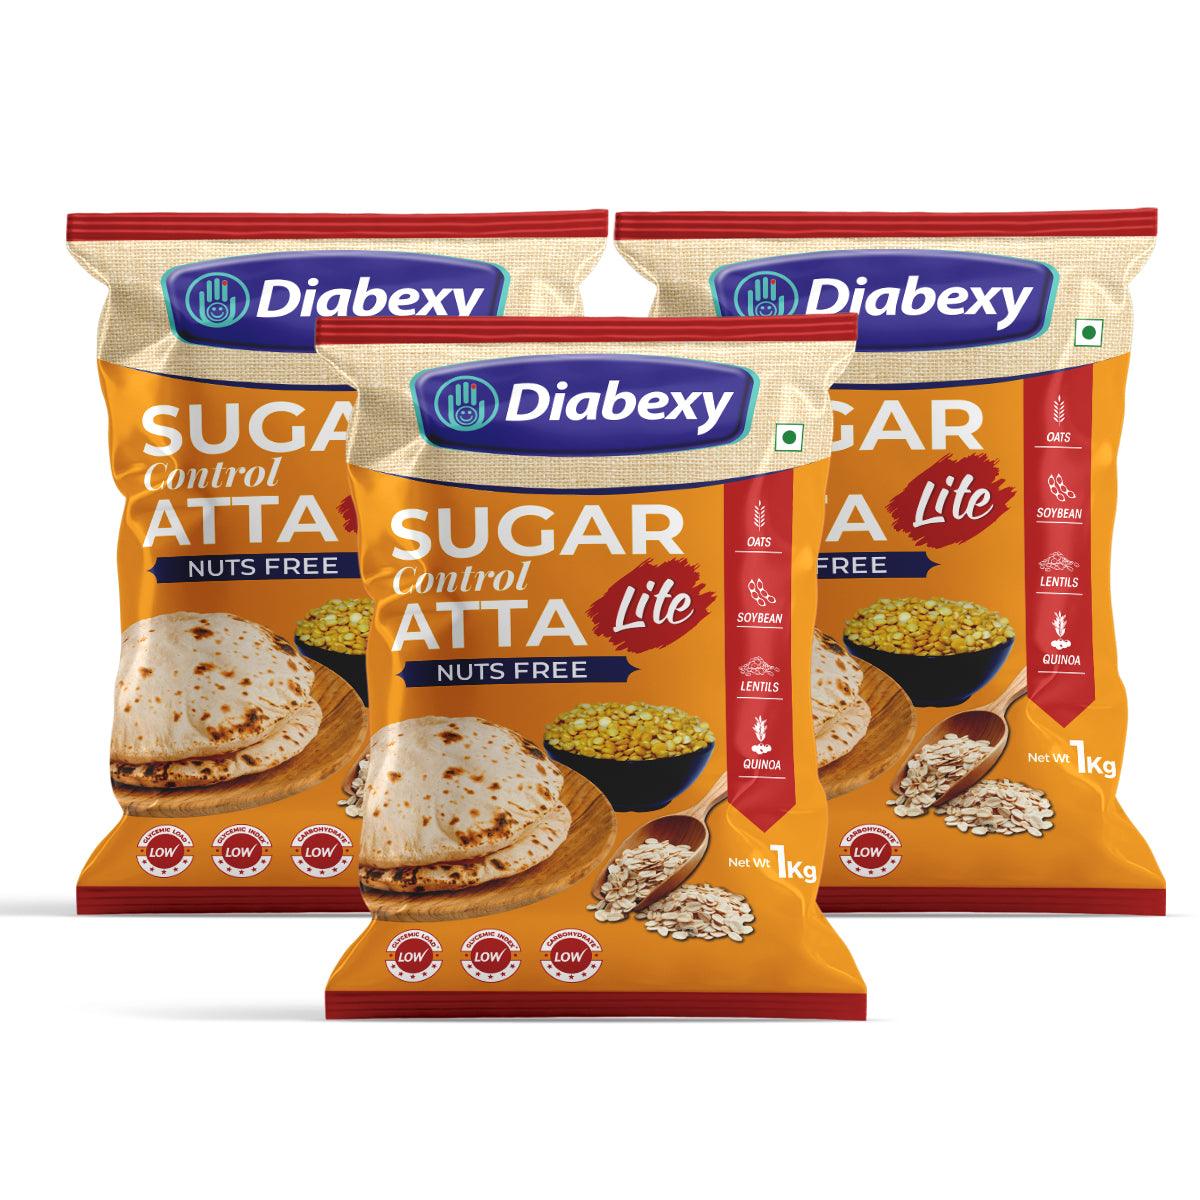 Diabexy Sugar Control Atta LITE Nuts Free - Diabexy